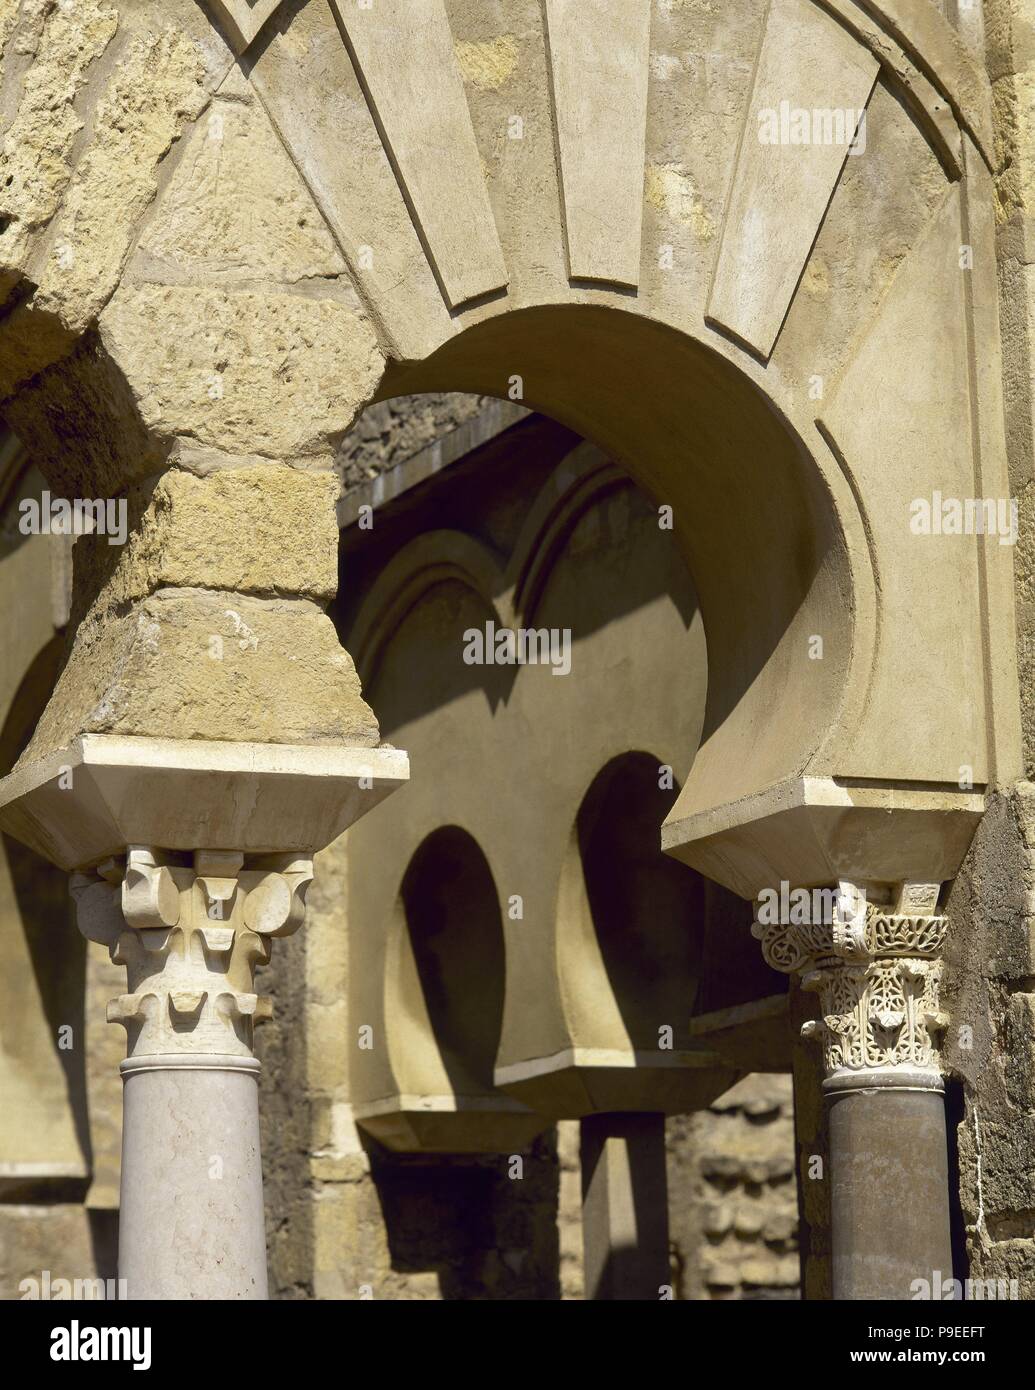 Medina Azahara. Muslim medieval palace-city built by Abd-ar-Rahman II al-Nasir, 10th century. Umayyad Caliph of Cordoba, Spain. Detail moorish arch. Stock Photo